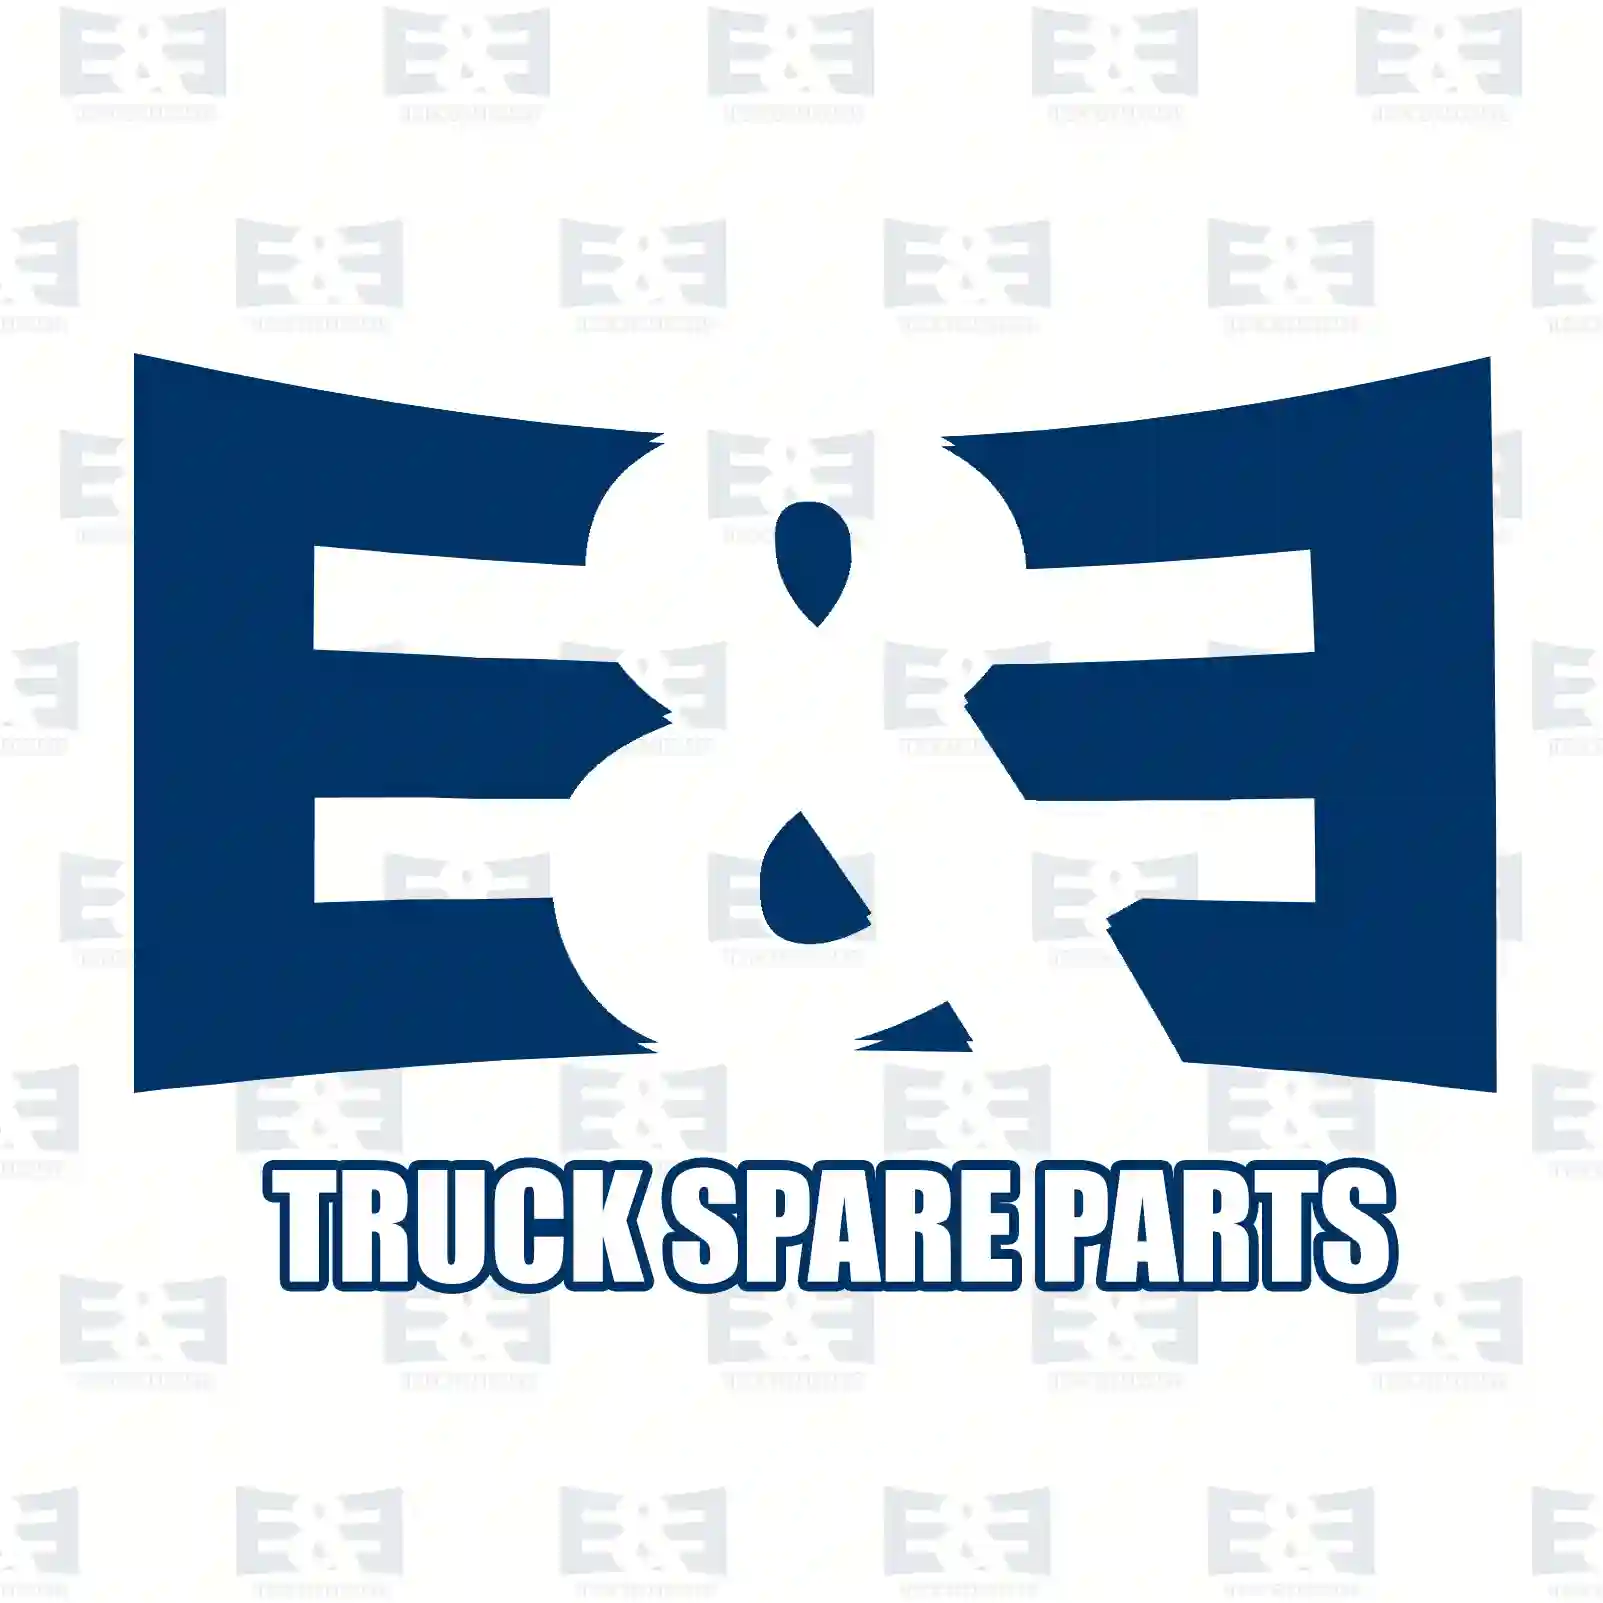 Drum brake lining kit, axle kit, 2E2296232, 1057006600, 1057006700, 1057306600, 1057306700, 1057316600, 1057316700, 3057006600, 3057306600, 3057396600 ||  2E2296232 E&E Truck Spare Parts | Truck Spare Parts, Auotomotive Spare Parts Drum brake lining kit, axle kit, 2E2296232, 1057006600, 1057006700, 1057306600, 1057306700, 1057316600, 1057316700, 3057006600, 3057306600, 3057396600 ||  2E2296232 E&E Truck Spare Parts | Truck Spare Parts, Auotomotive Spare Parts